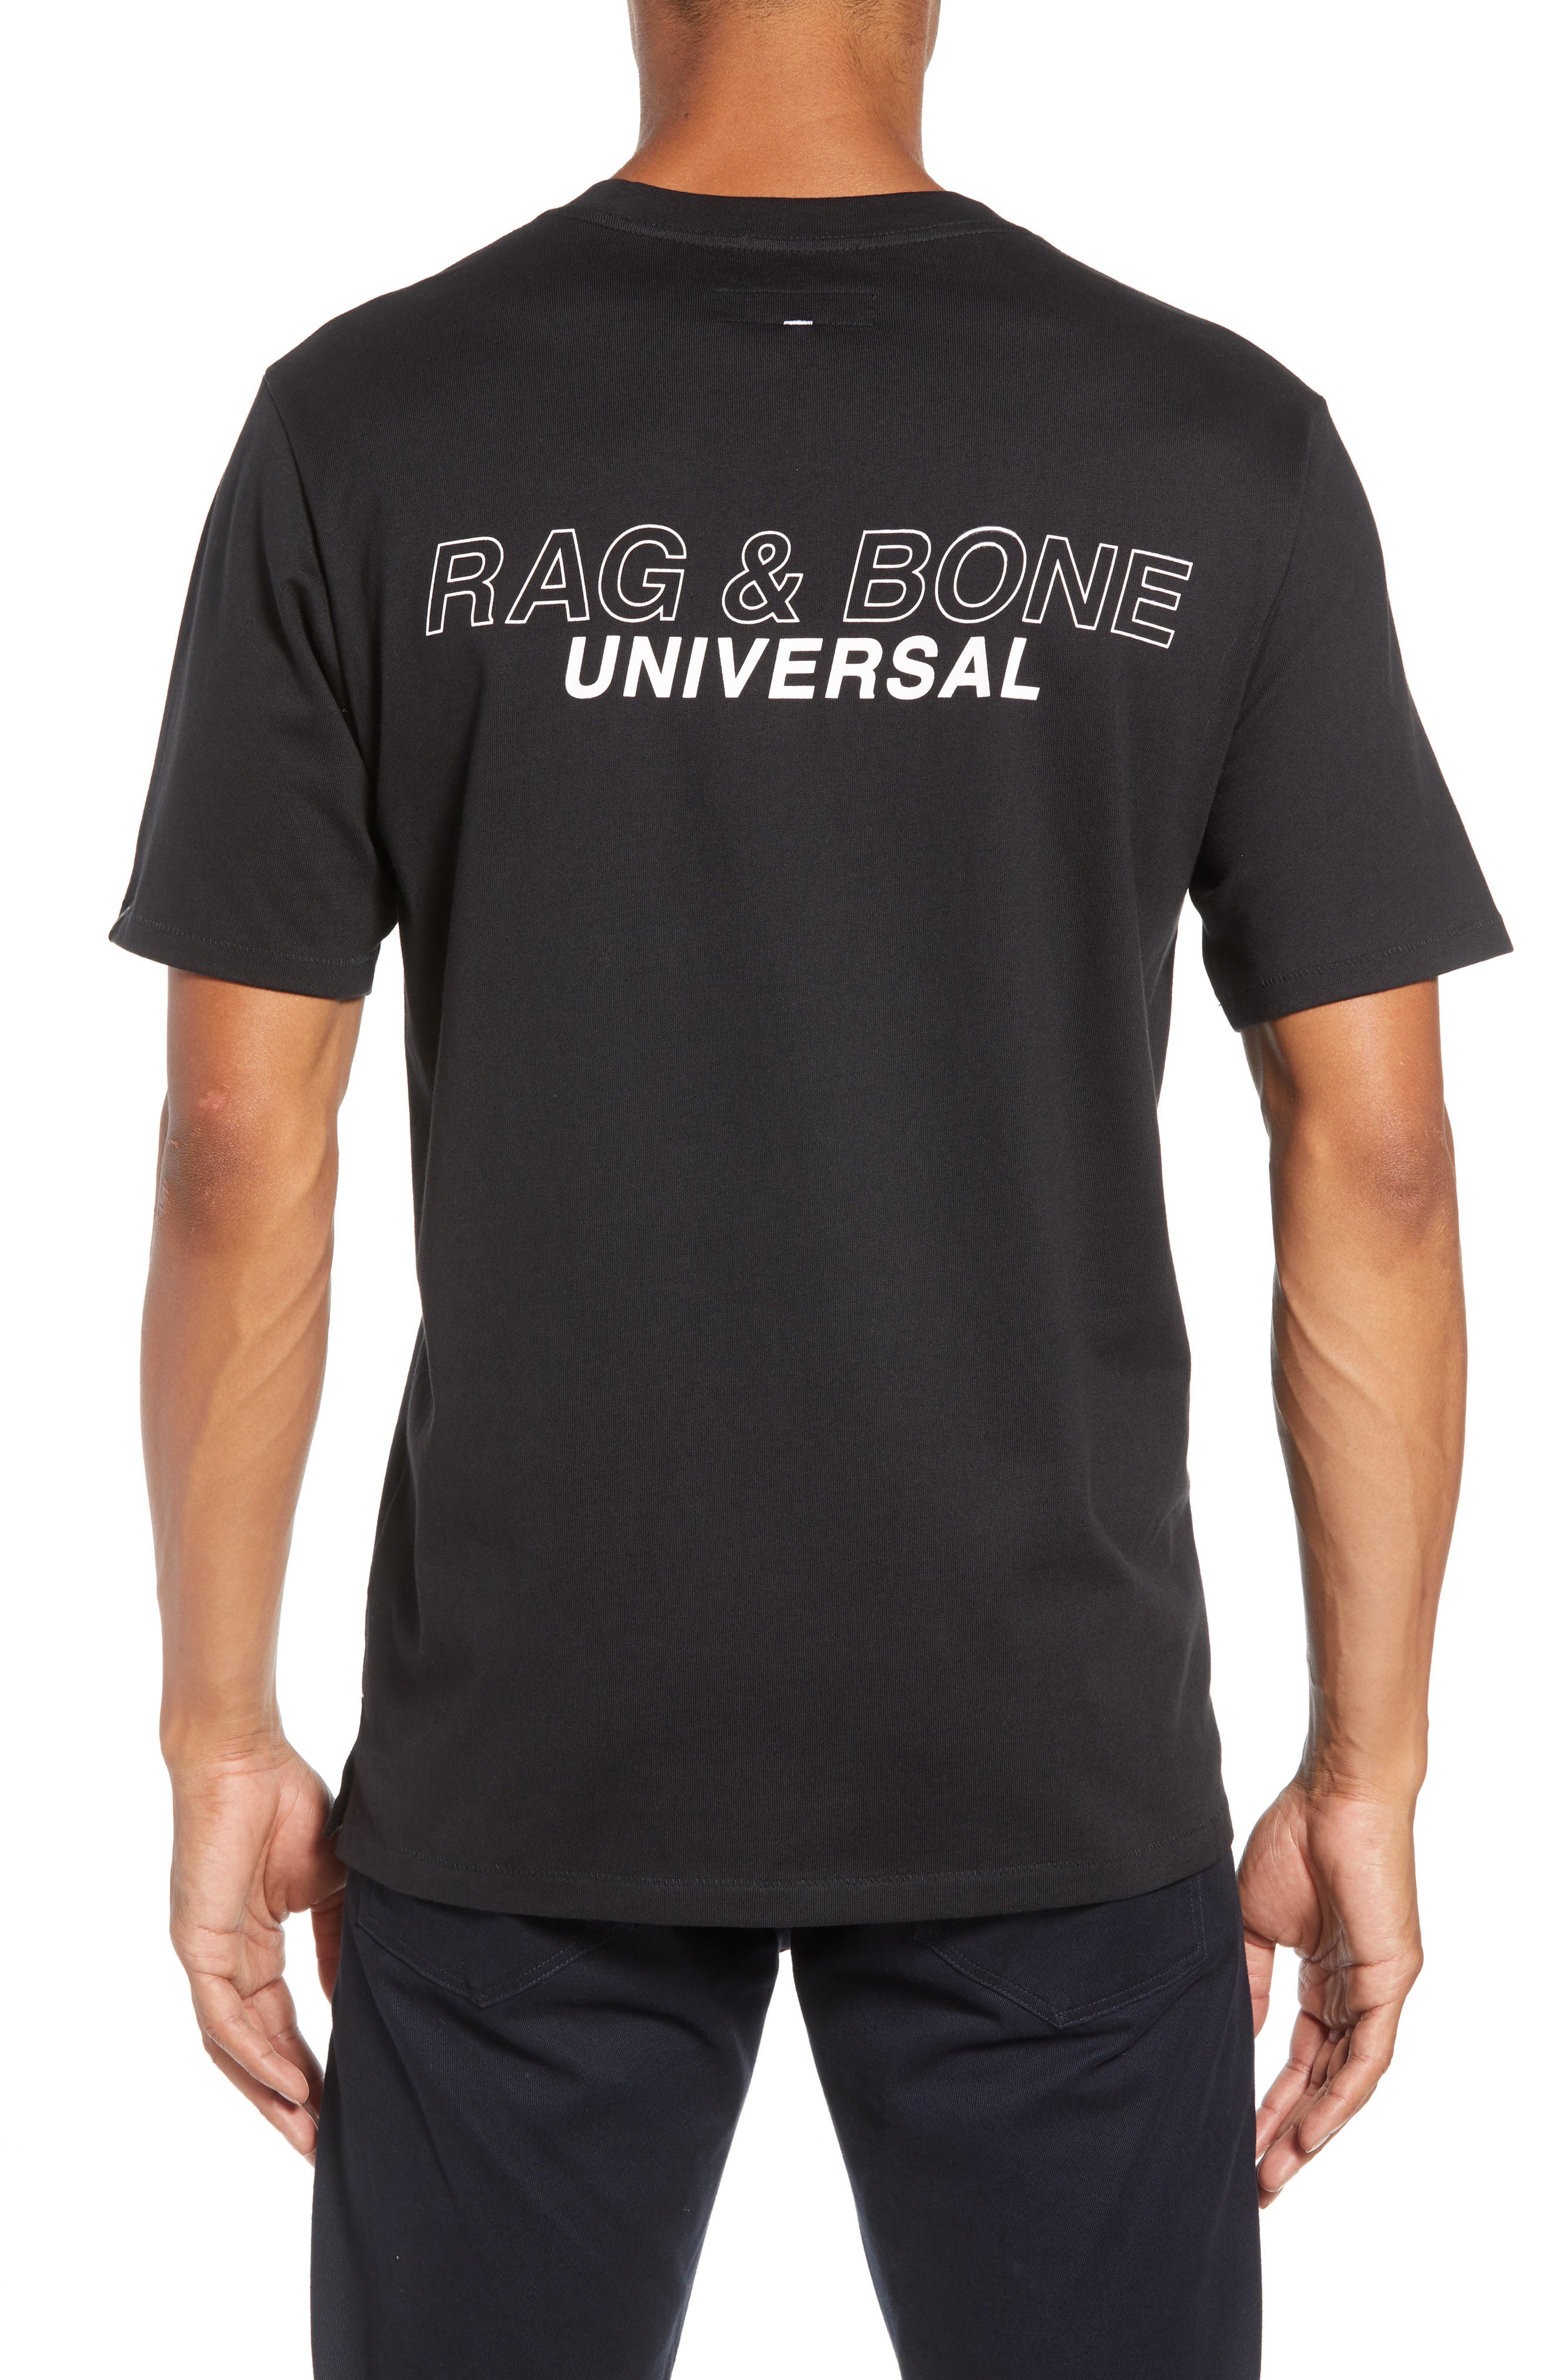 rag and bone universal